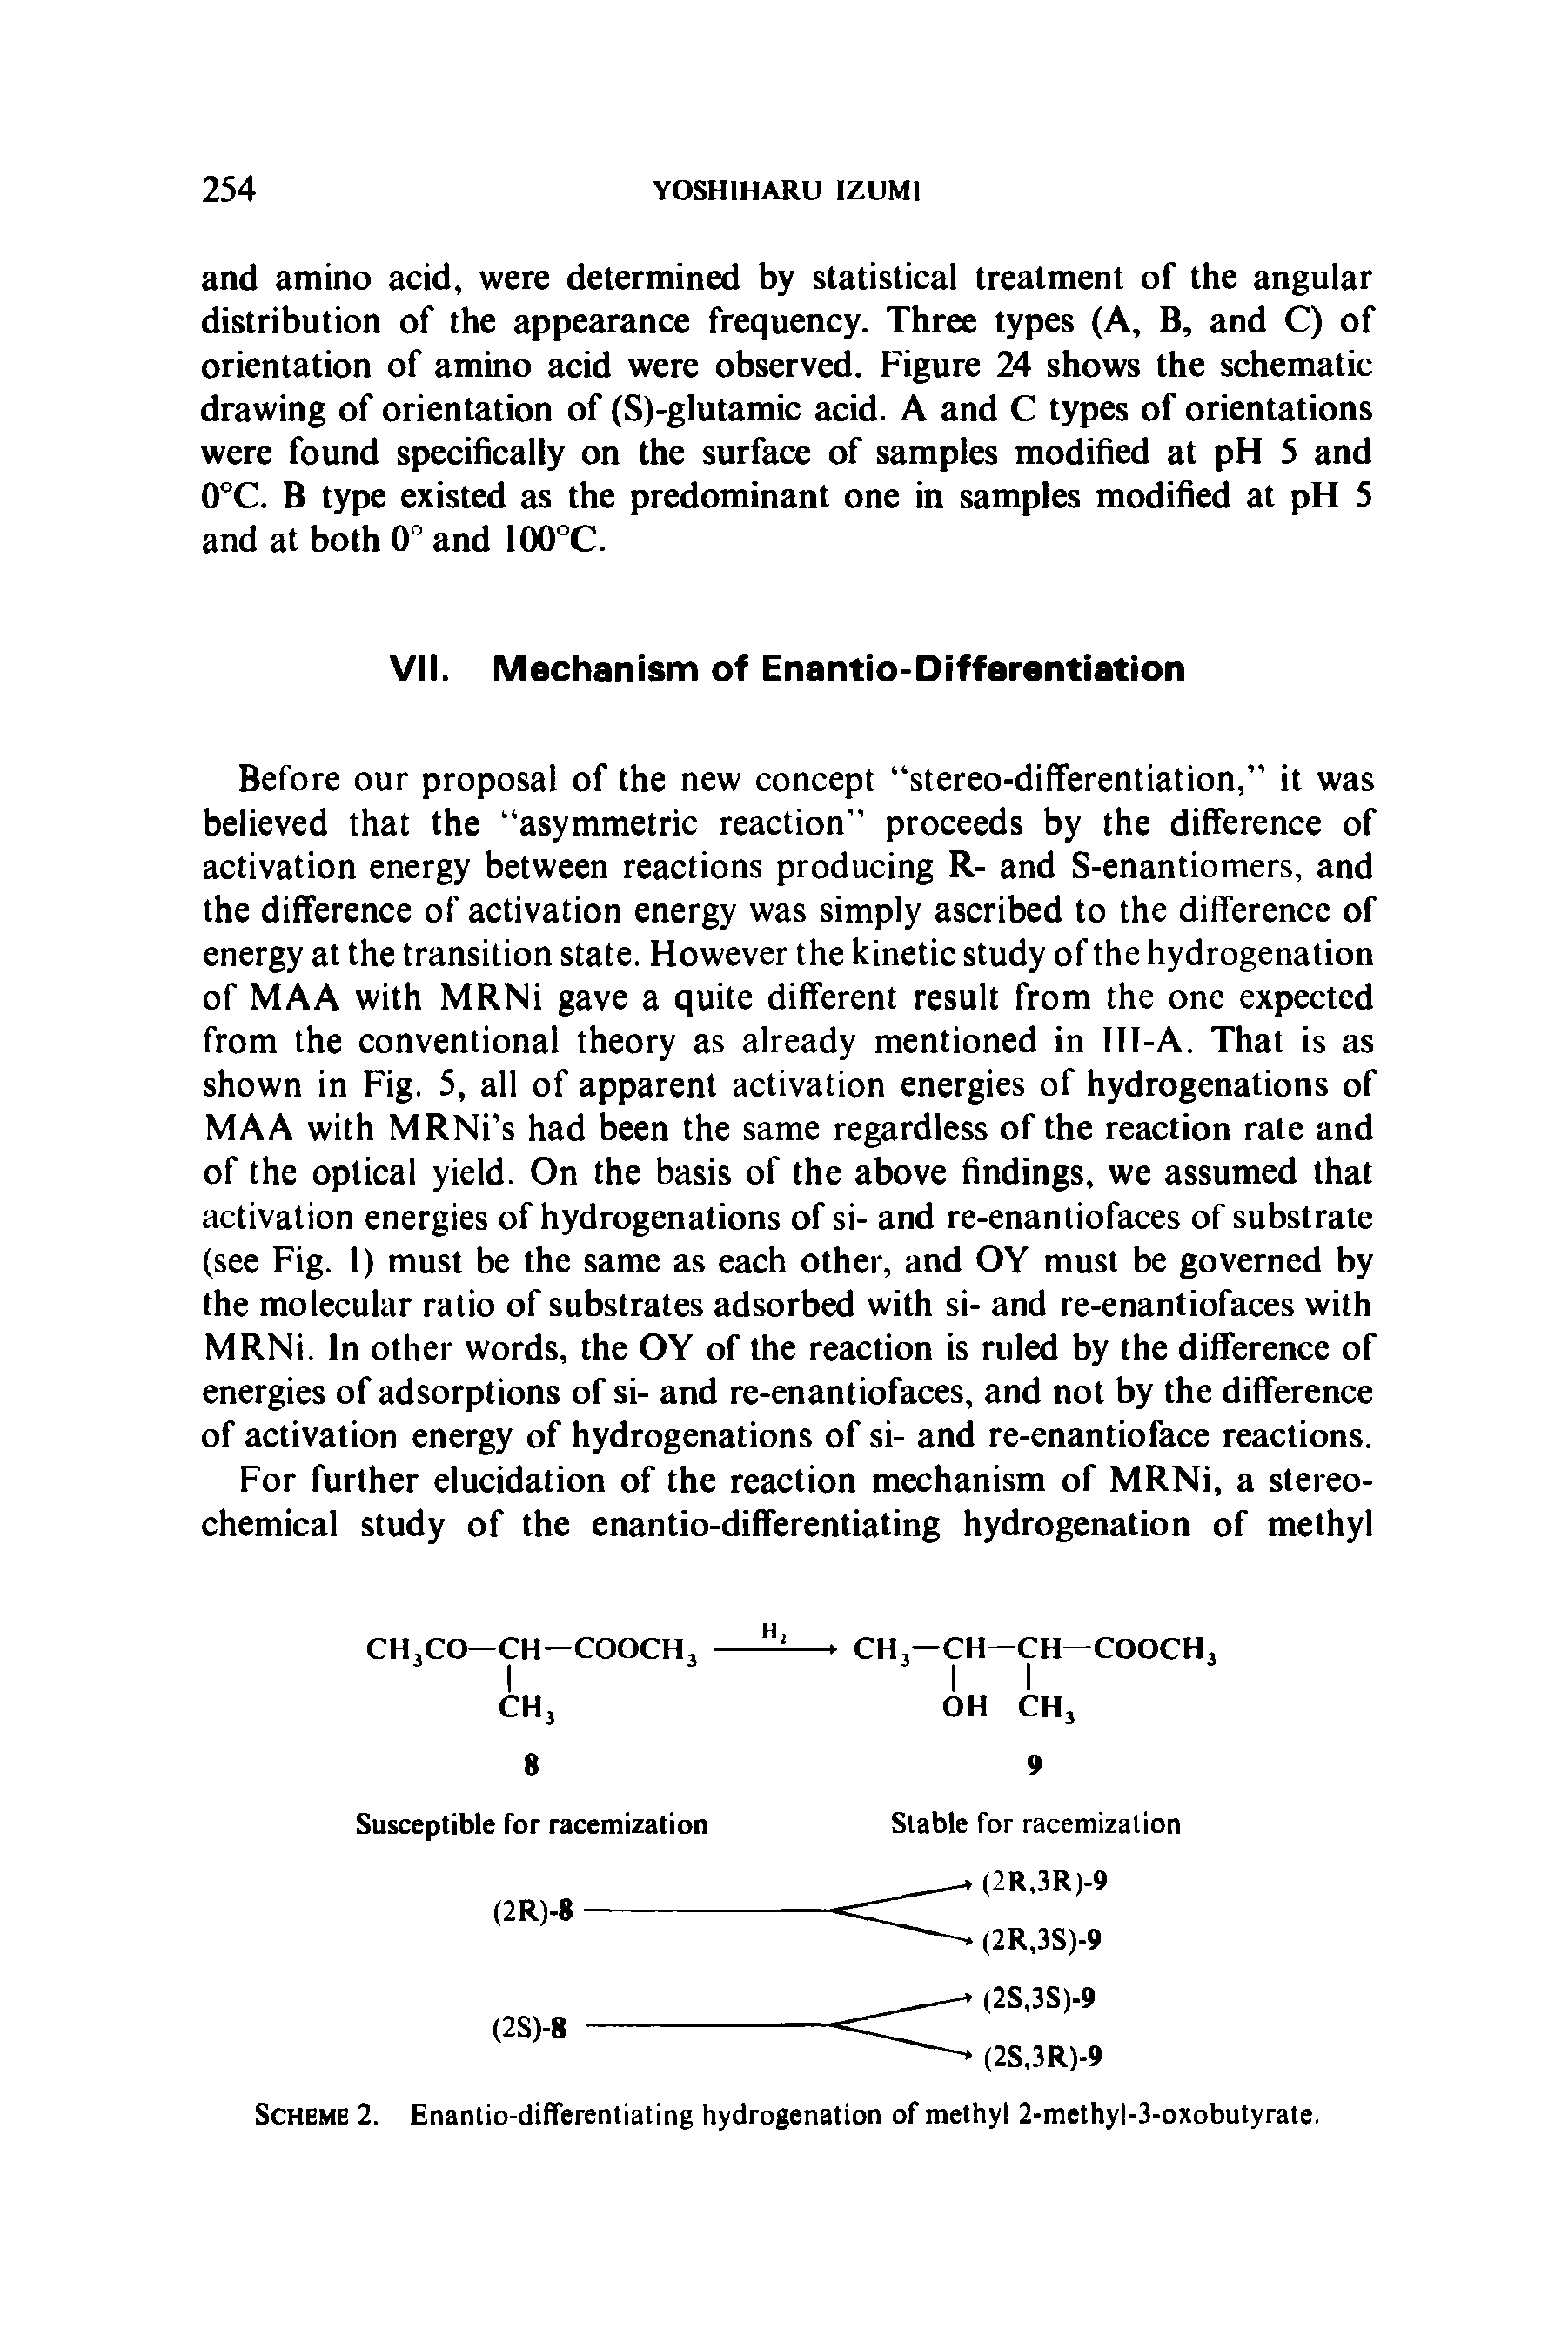 Scheme 2. Enantio-differentiating hydrogenation of methyl 2-methyl-3-oxobutyrate.